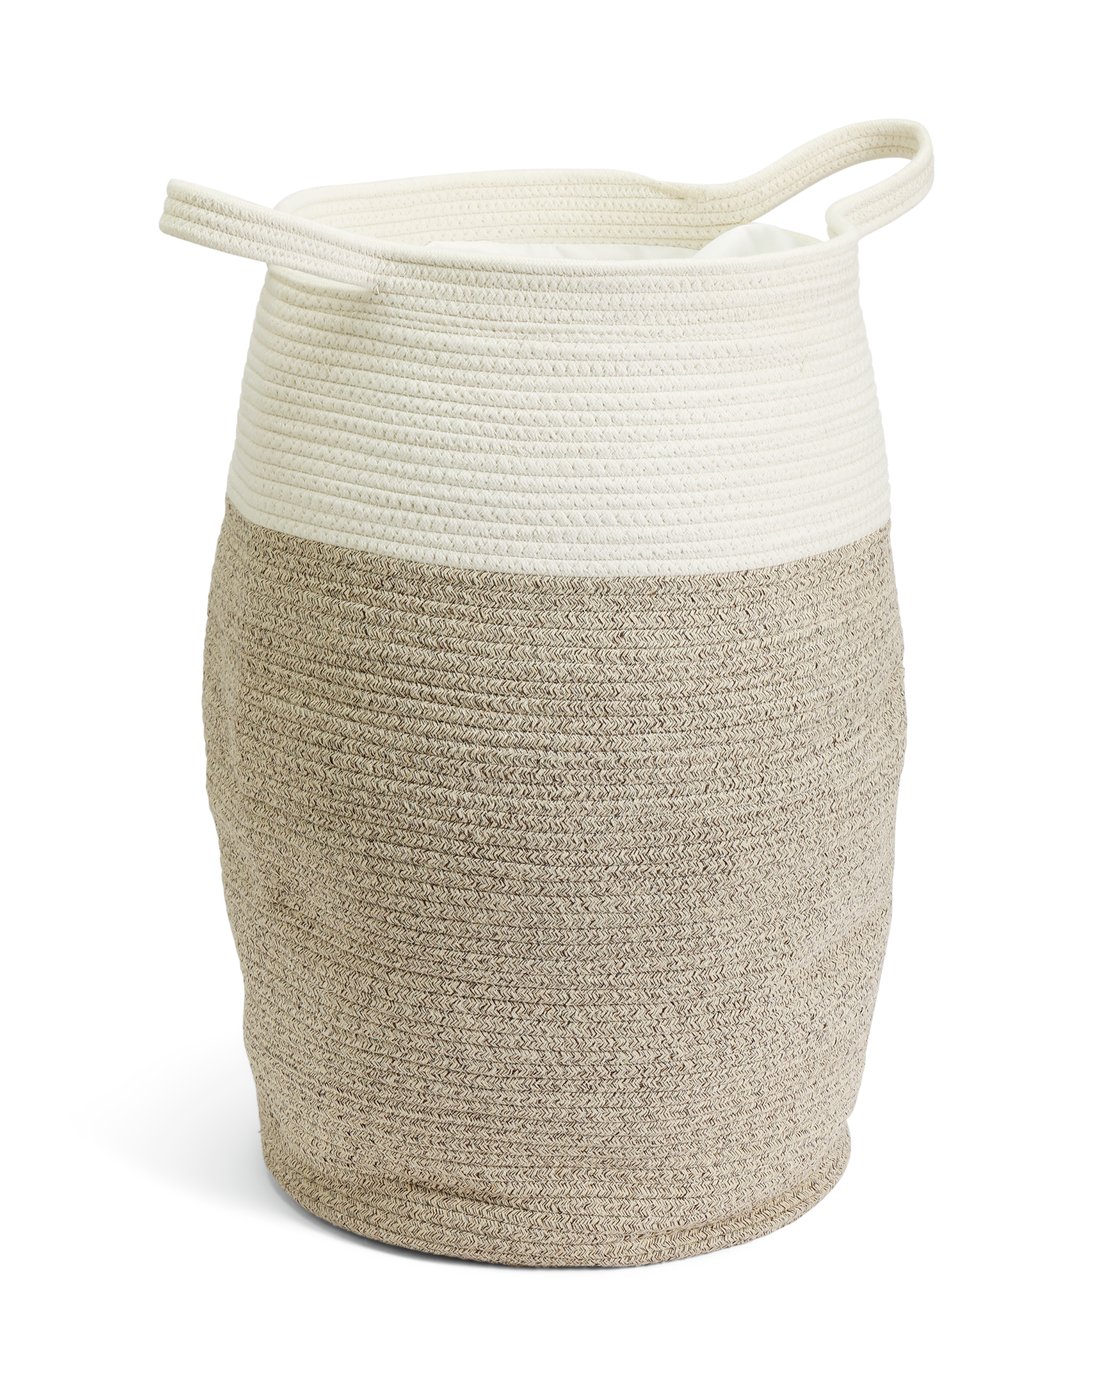 Habitat Grey and Neutral Cotton Rope Laundry Basket.